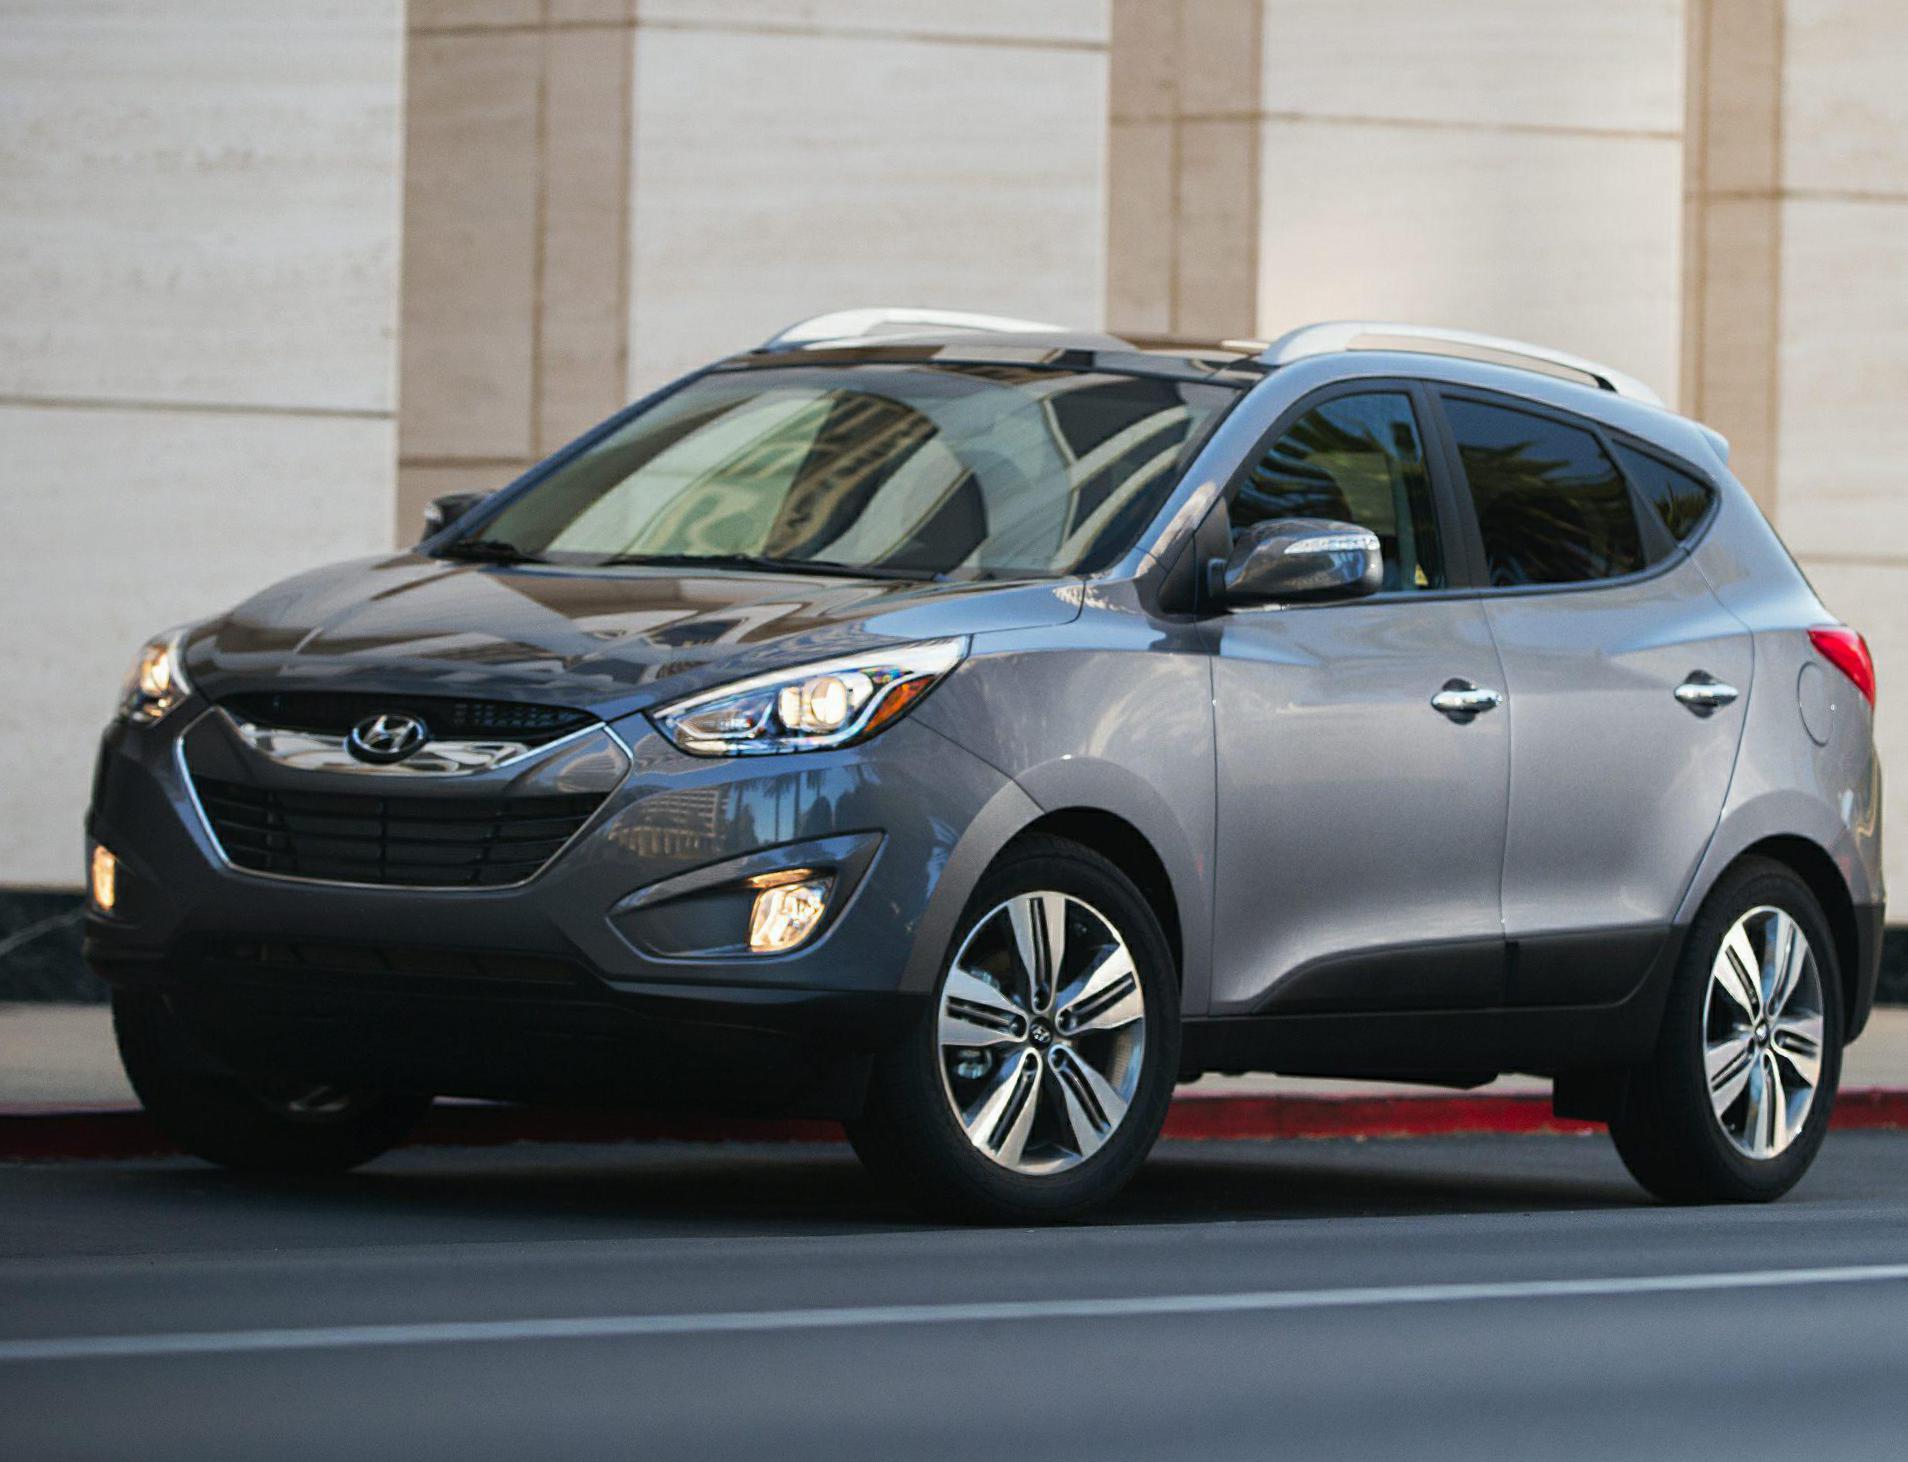 Tucson Hyundai prices 2015